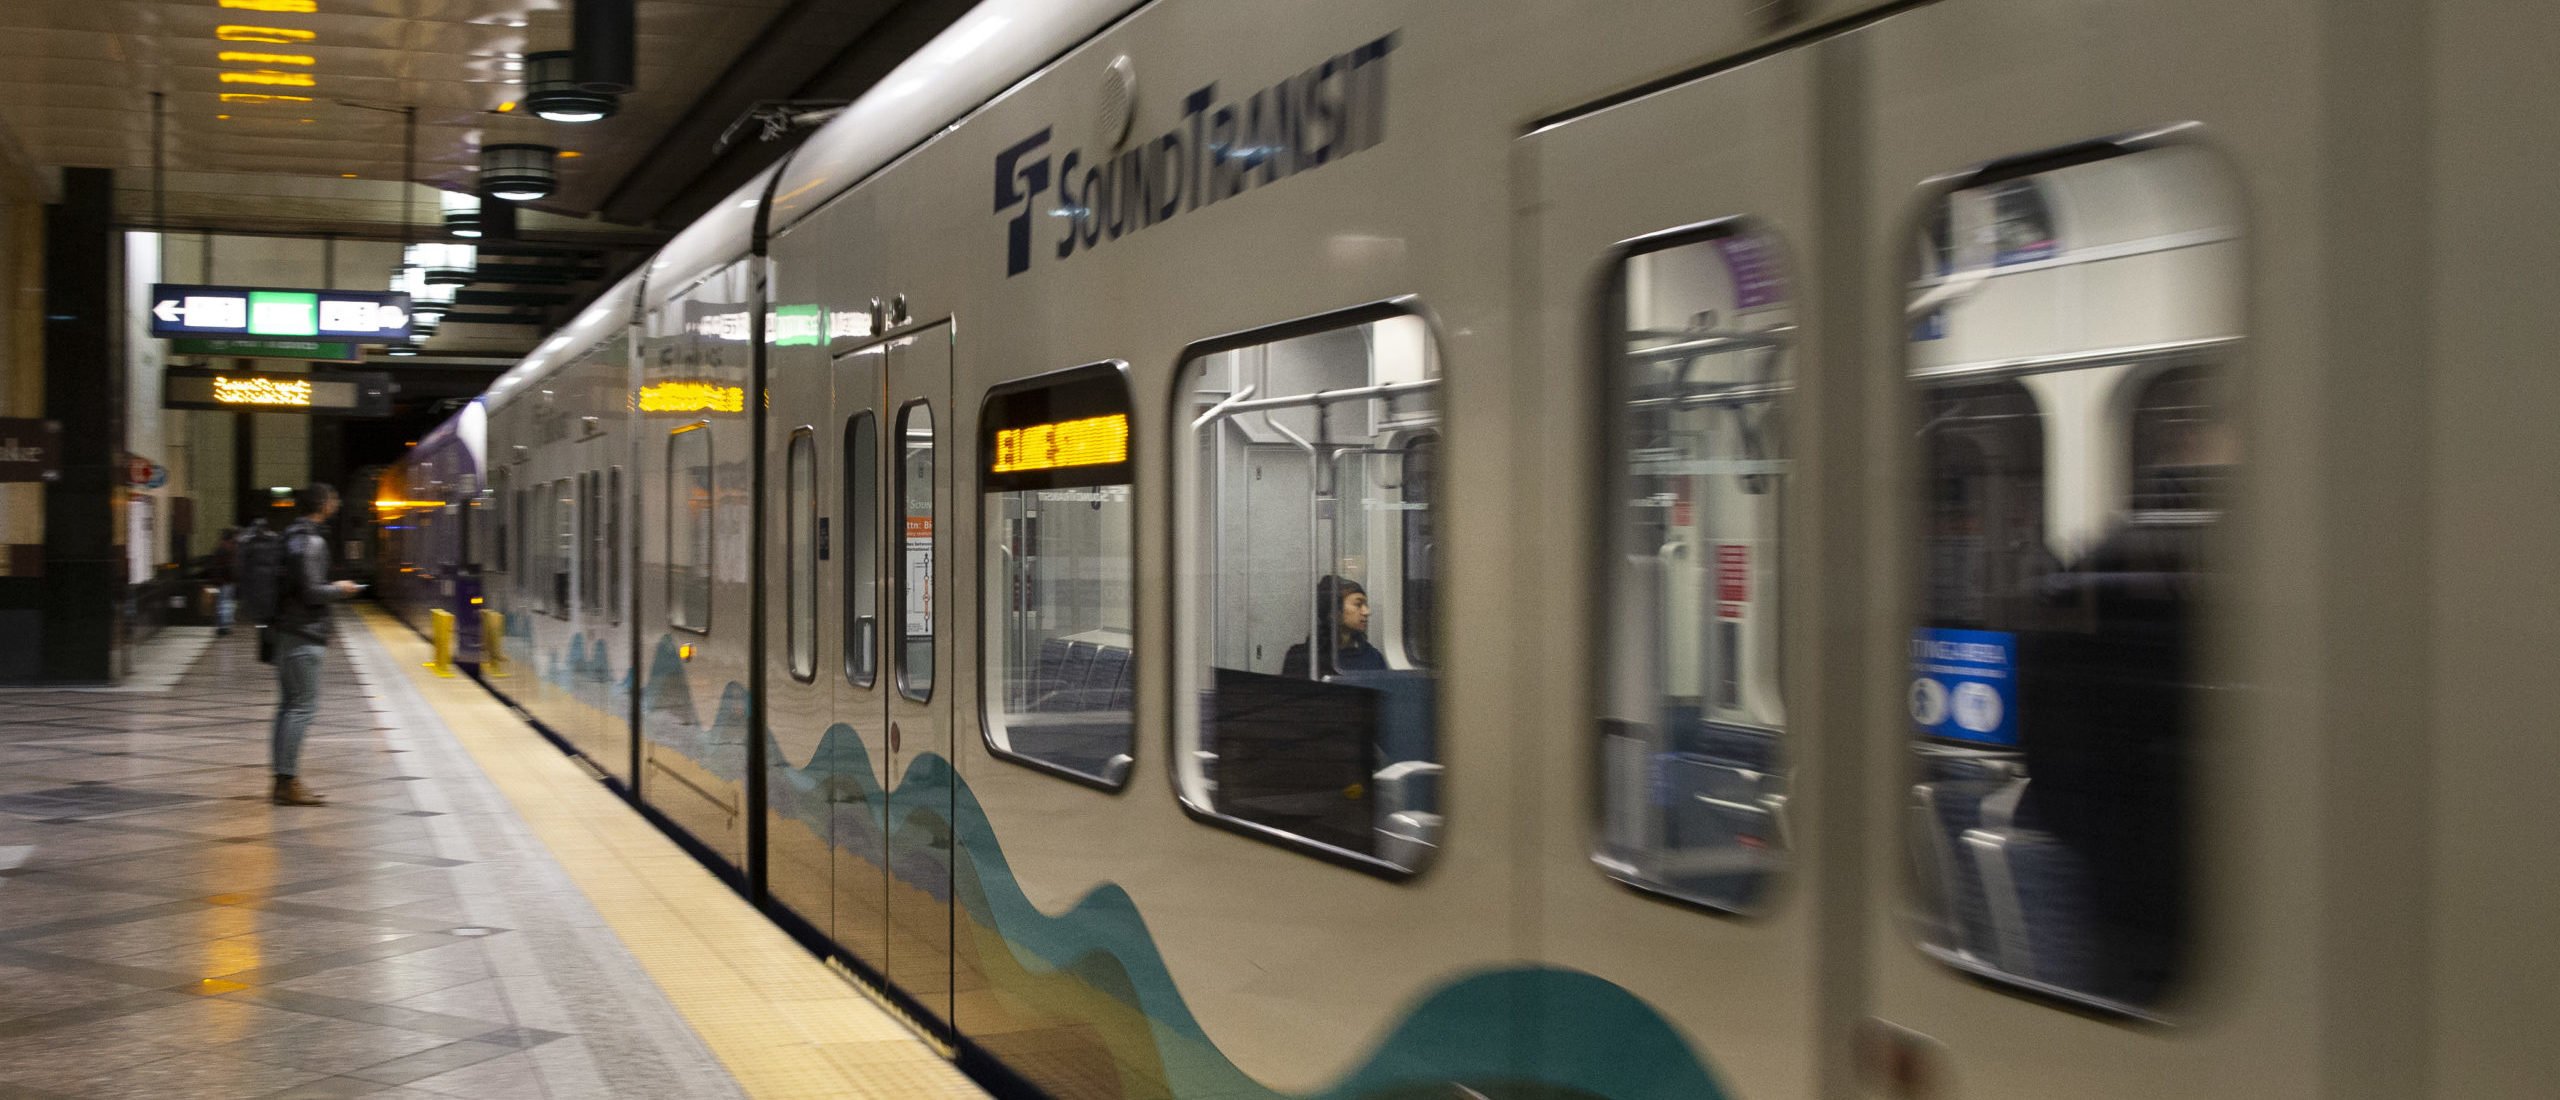 Toxic Fentanyl, Meth Smoke Make Seattle’s Transit System Unusable, Authorities Say